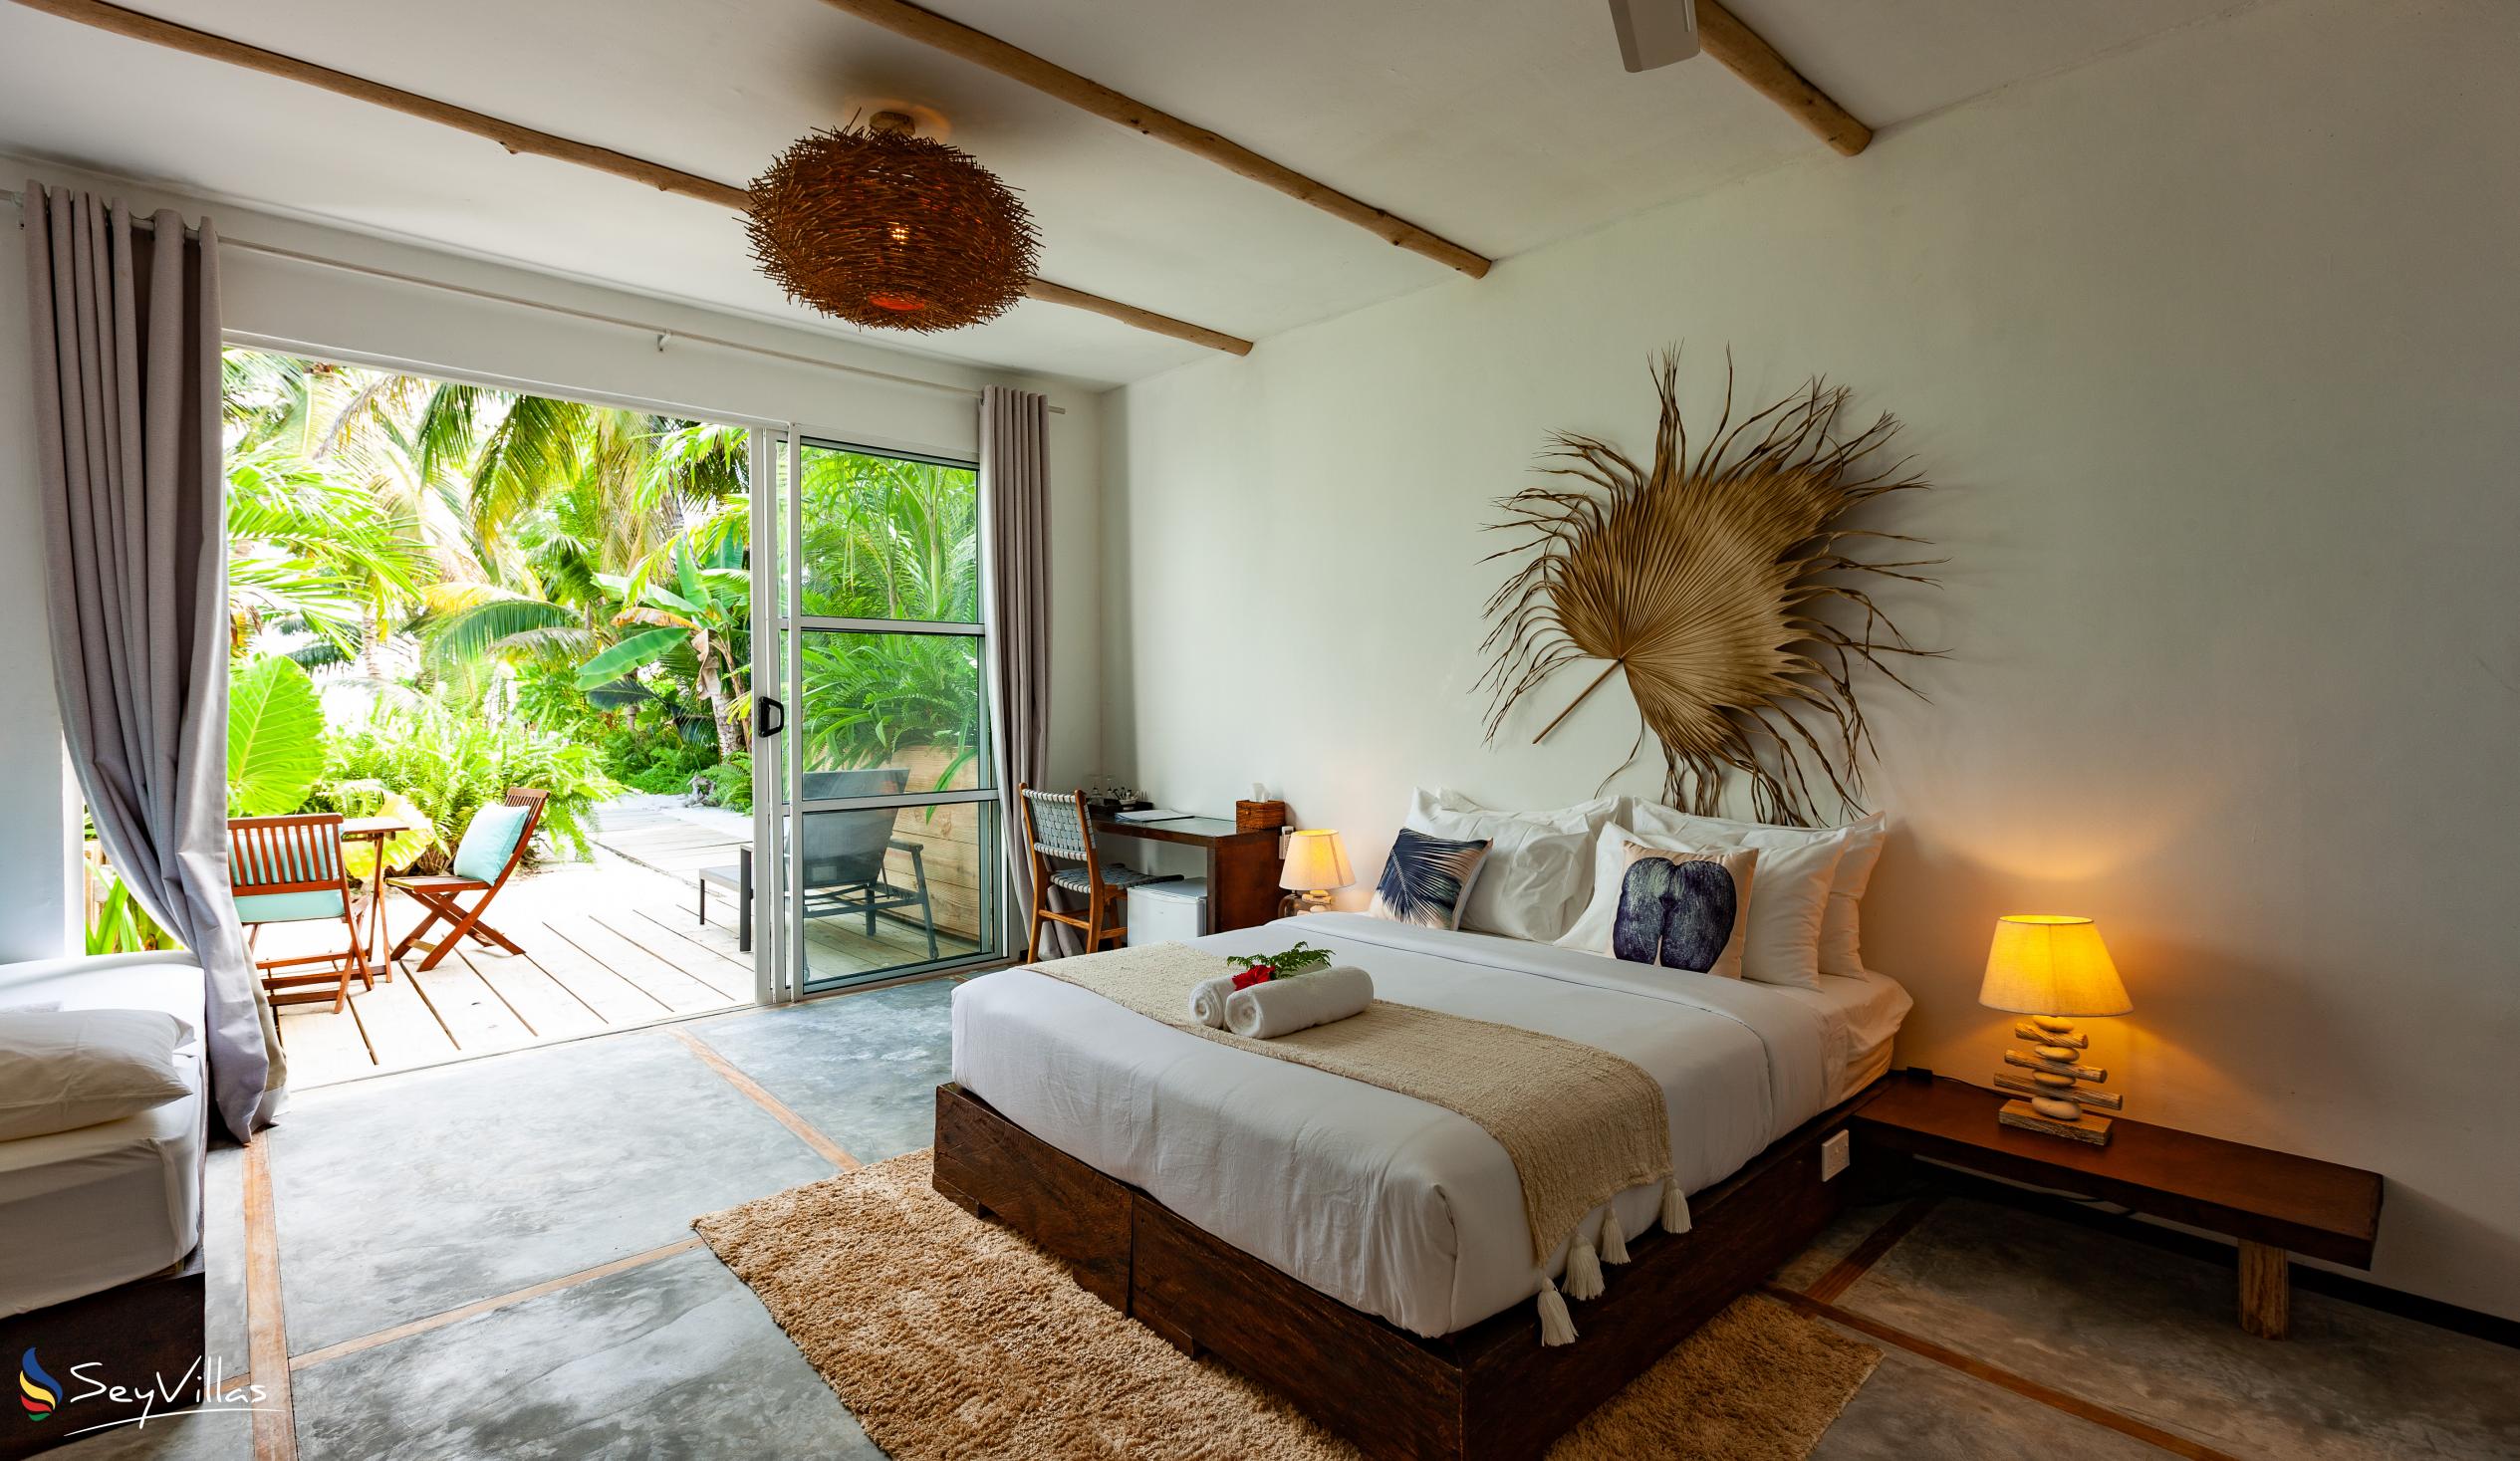 Photo 93: Bliss Hotel Praslin - Beach House - Beach Superior Room - Praslin (Seychelles)